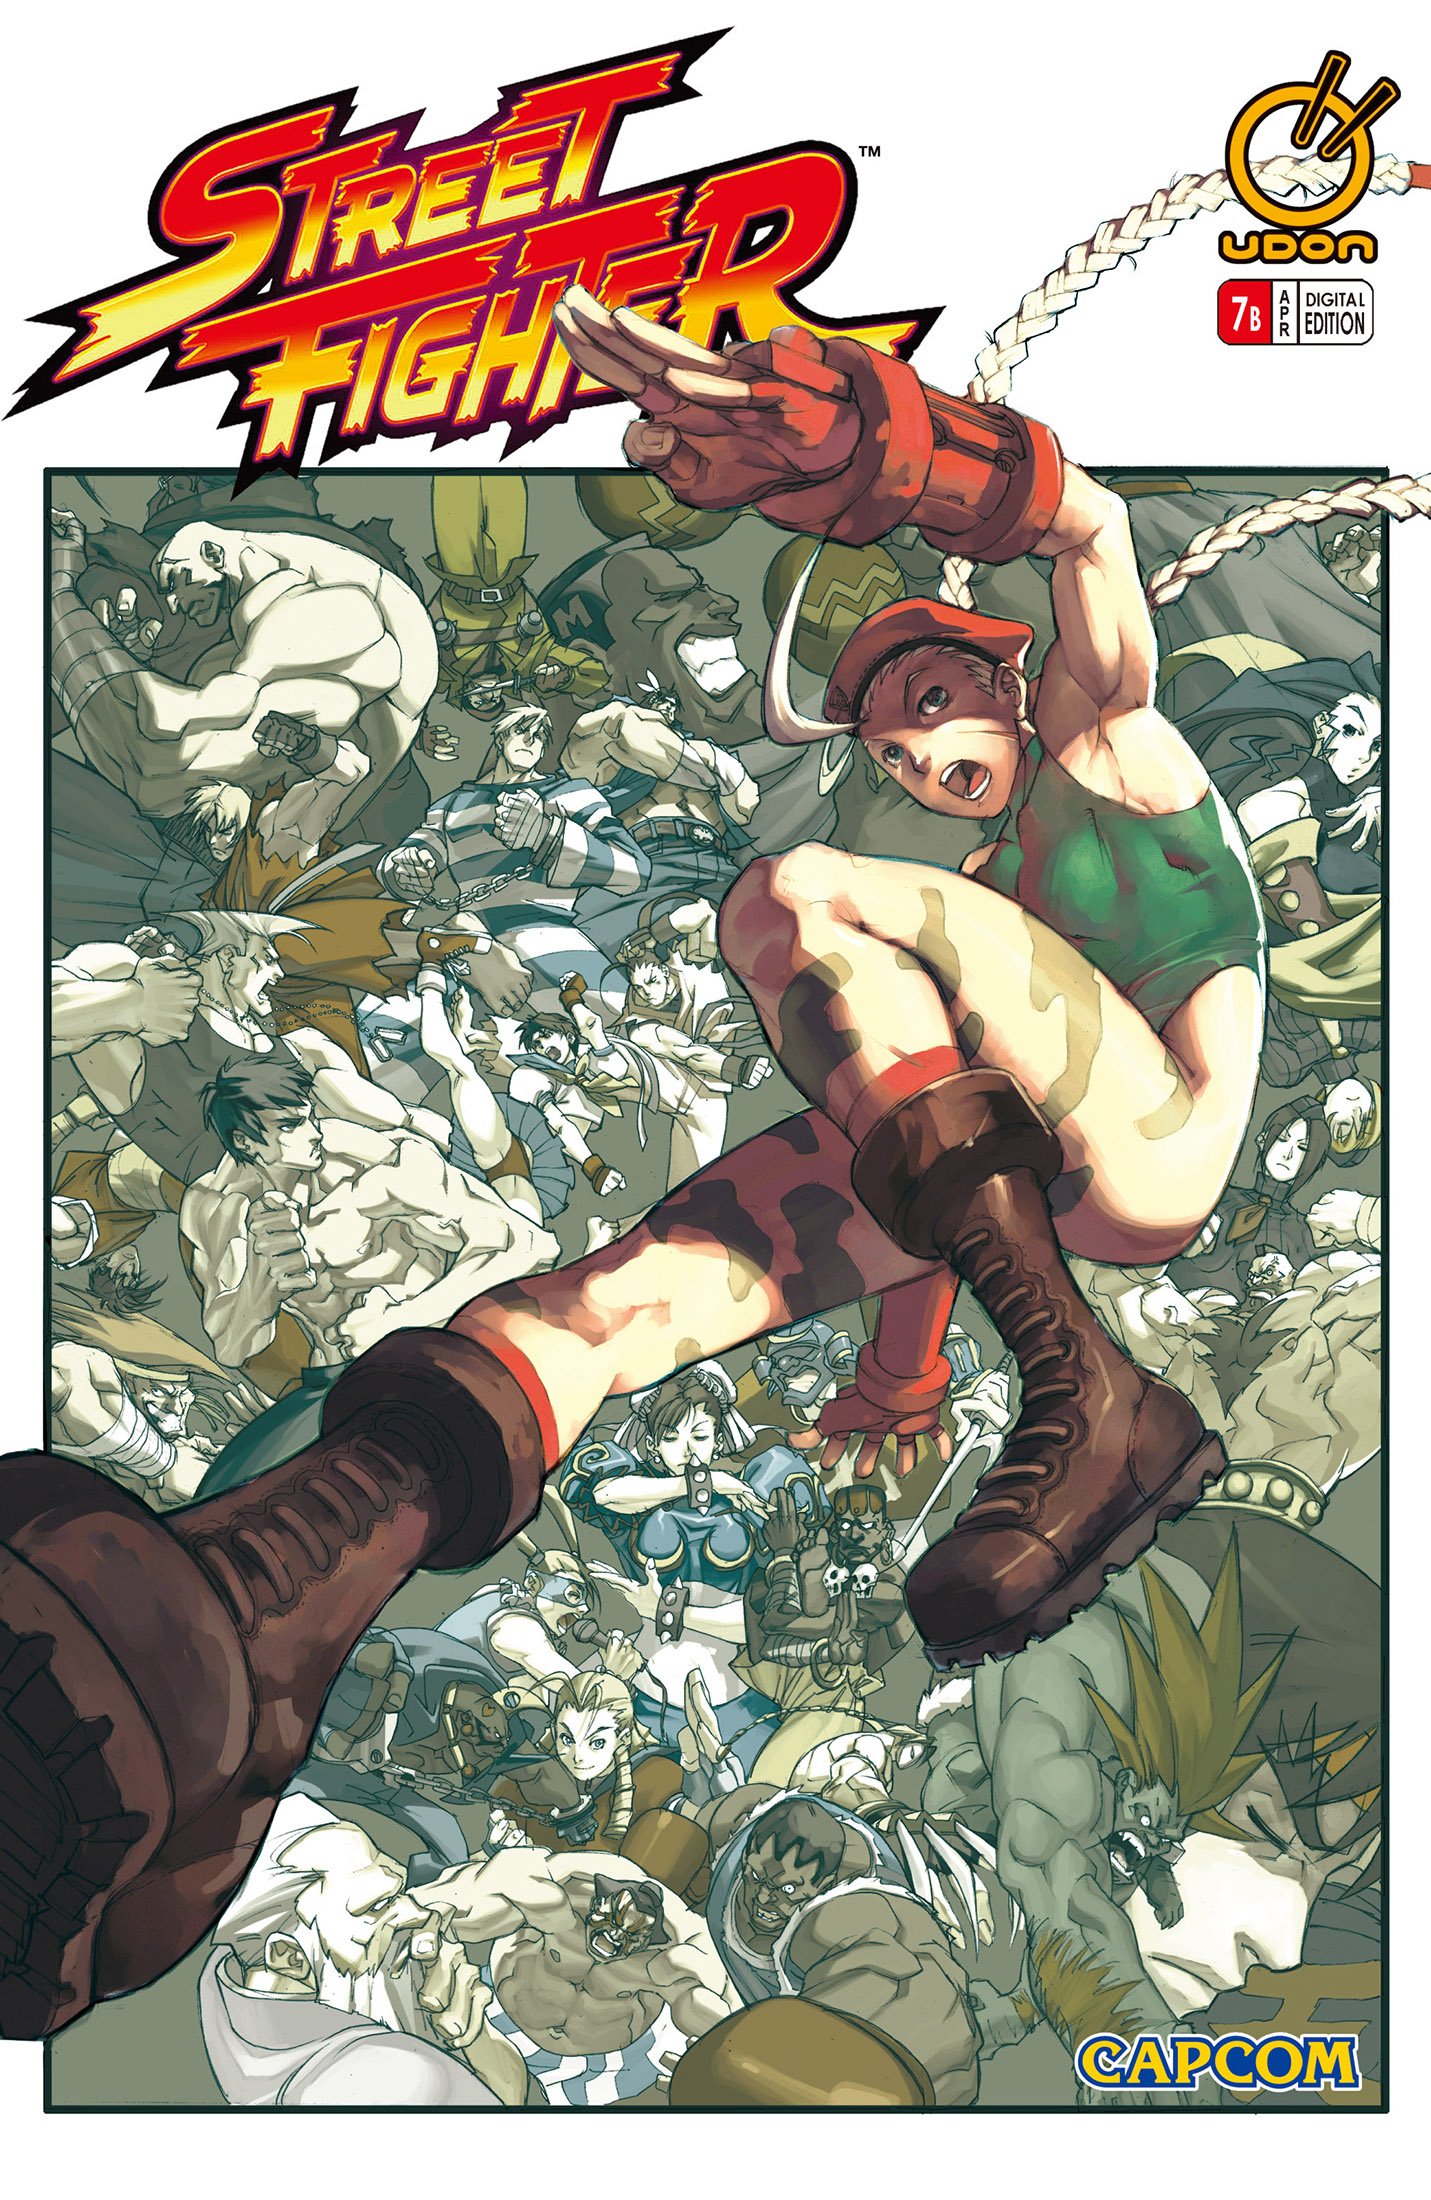 Street Fighter Vol.1 007 (April 2004) (cover b)